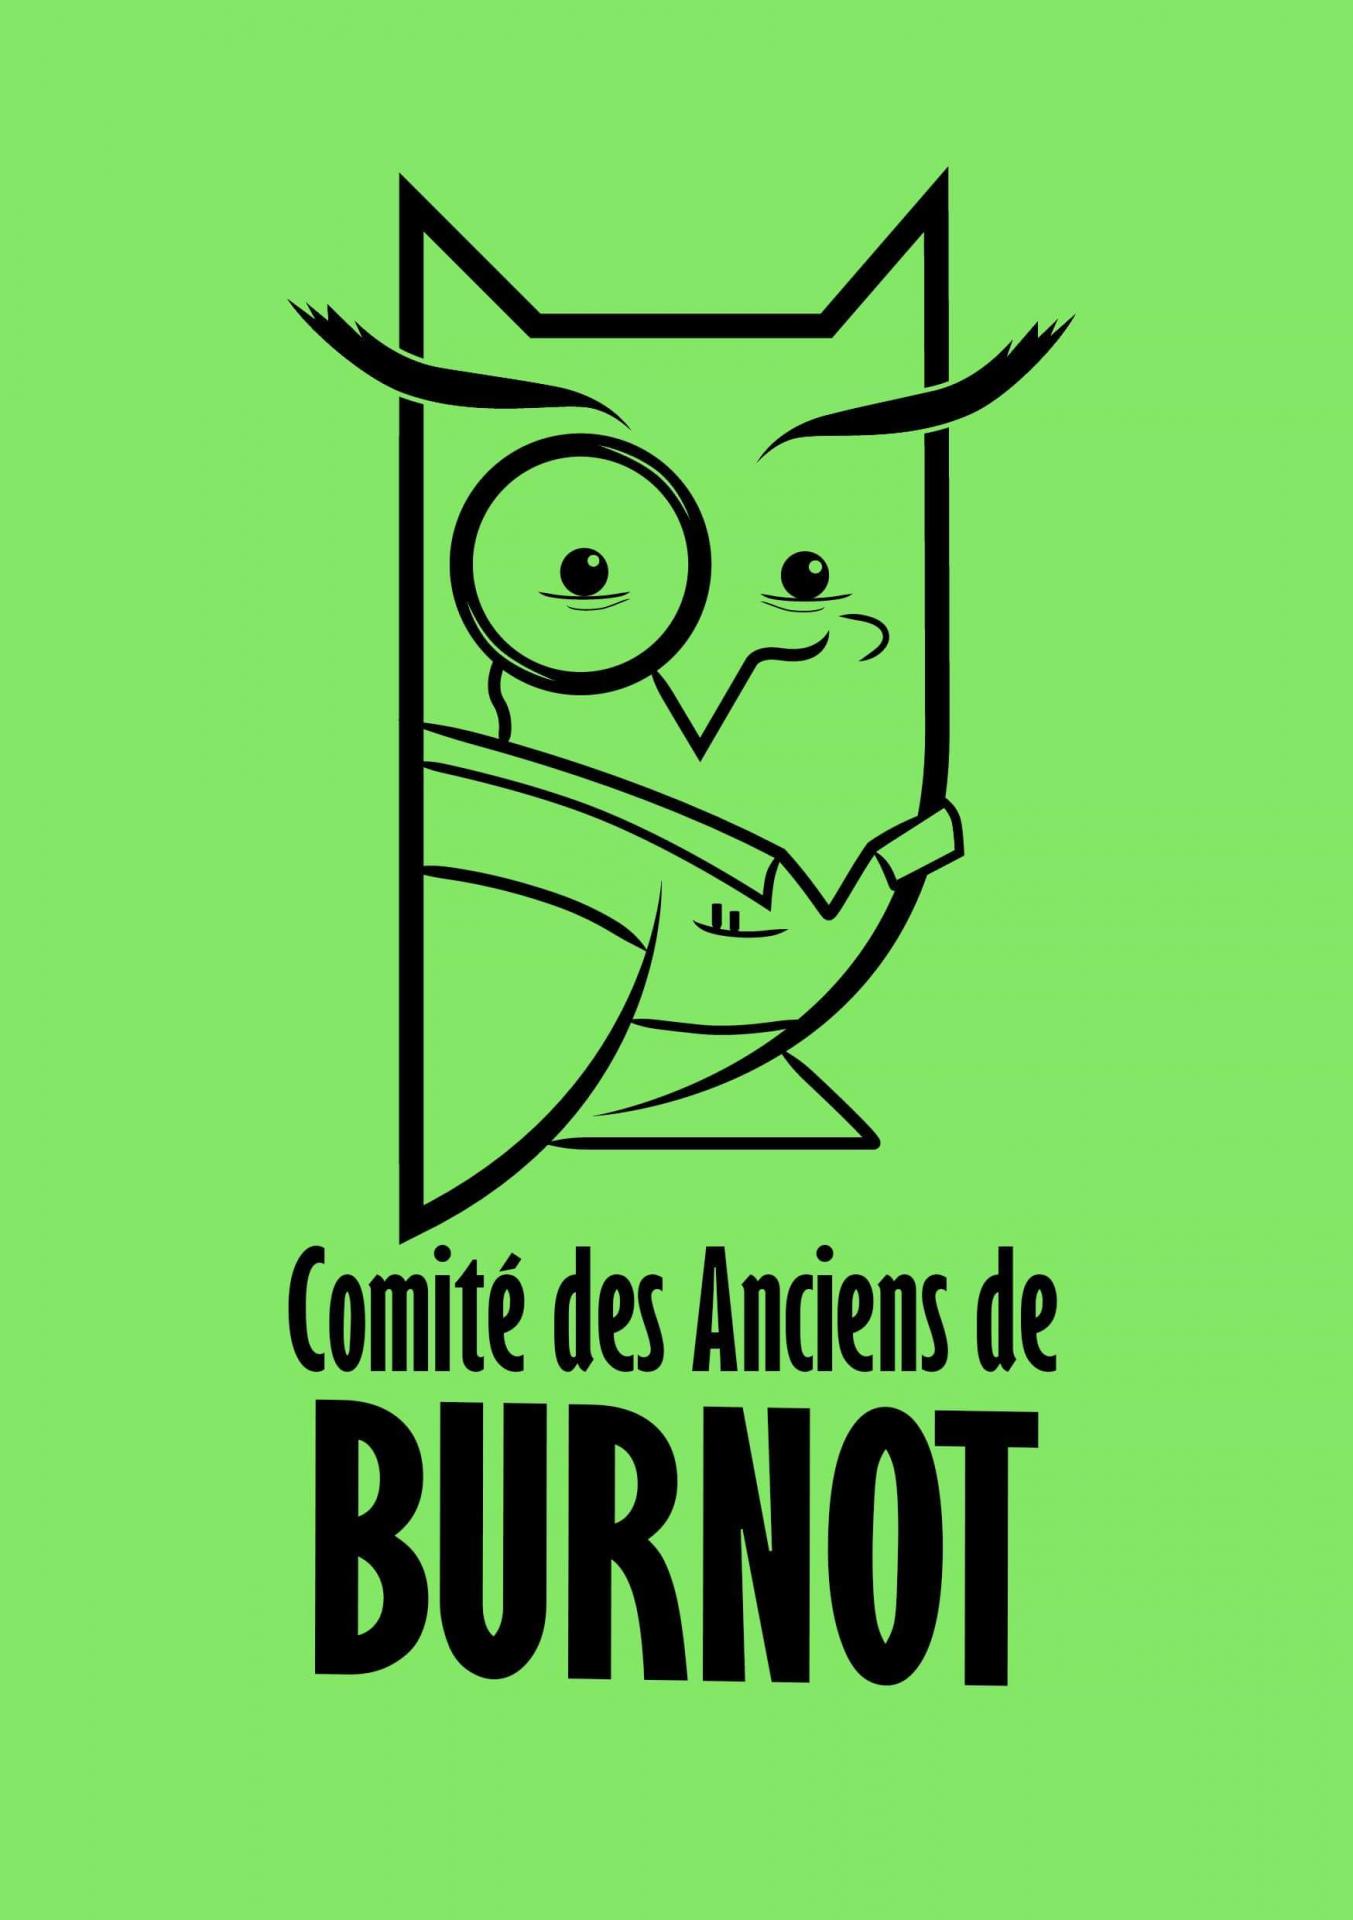 Burnot